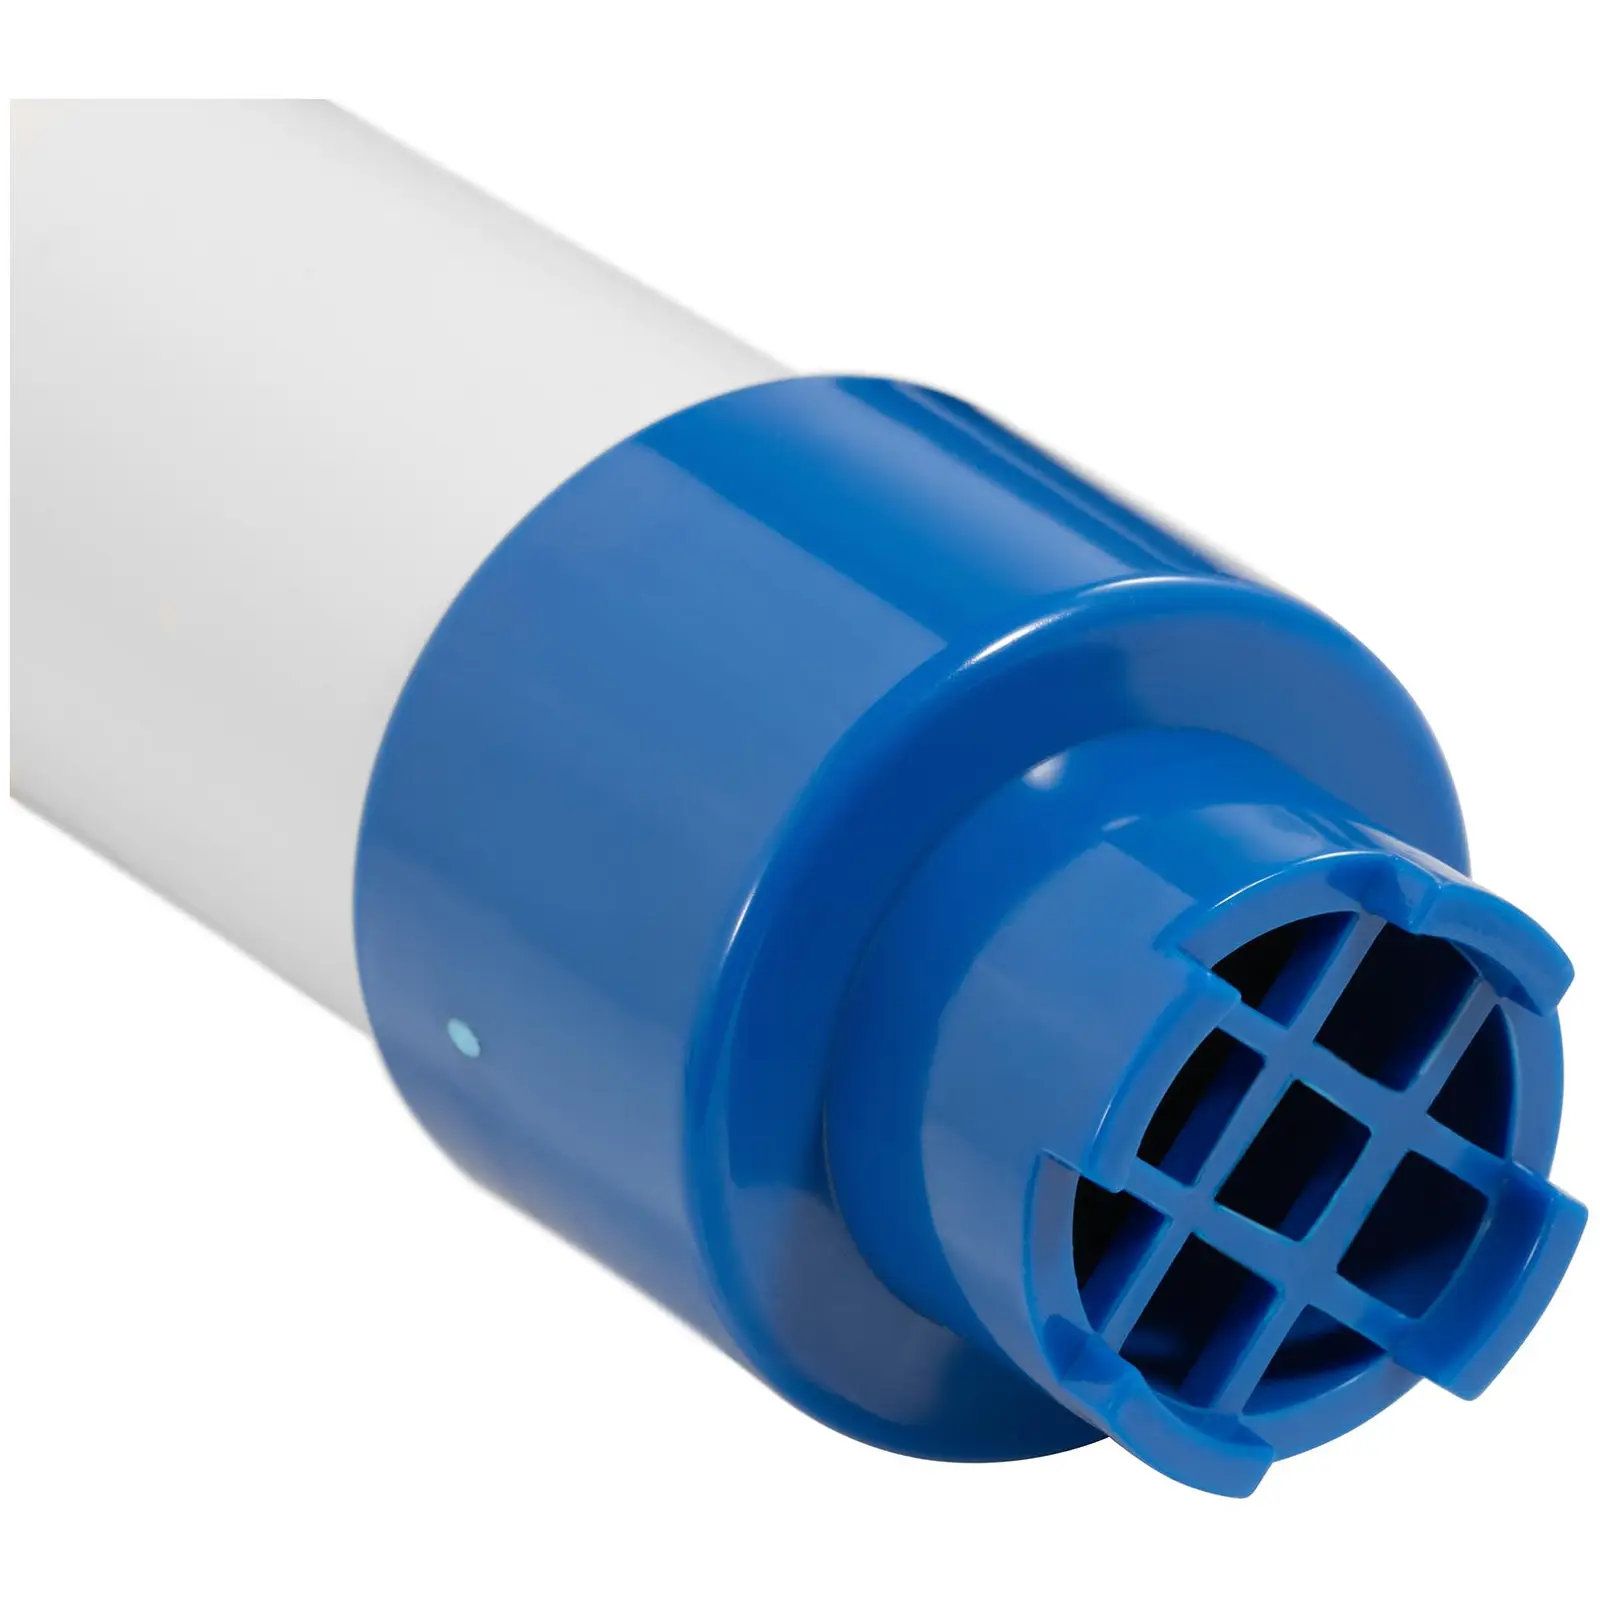 Handwasserpumpe Lenzpumpe - 4 m Förderhöhe - 45 l/min Durchflussmenge -  glasfaserverstärkter Kunststoffgriff